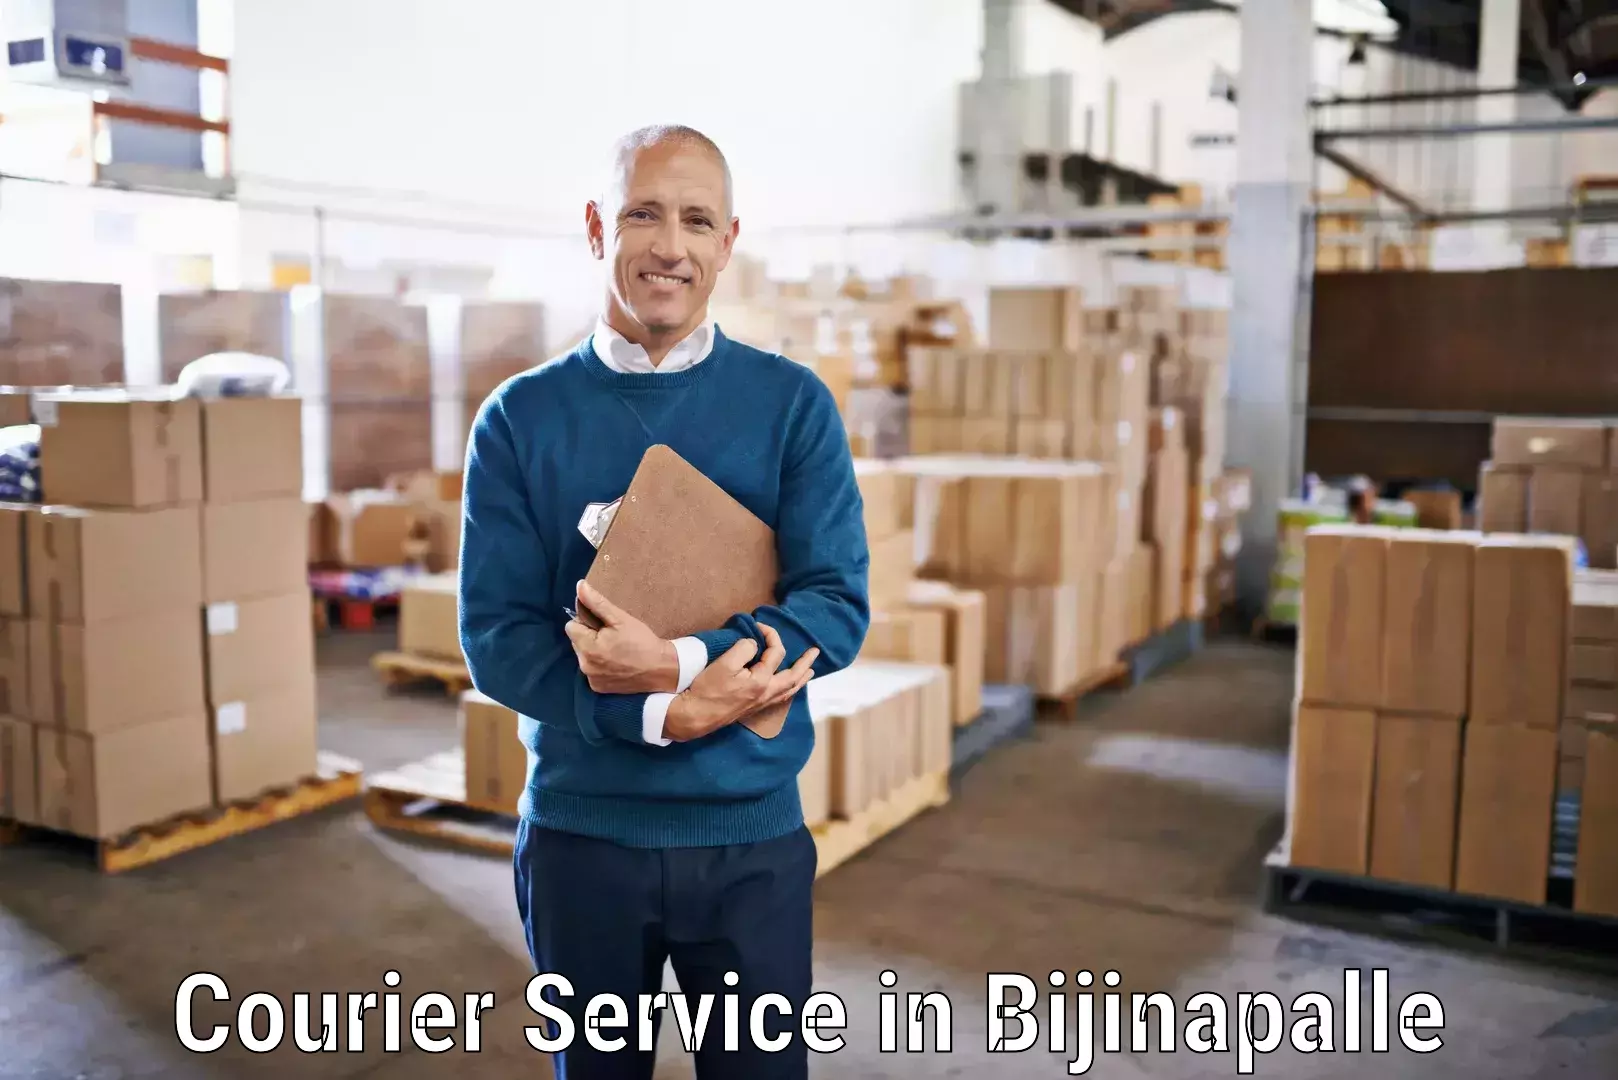 Courier service comparison in Bijinapalle